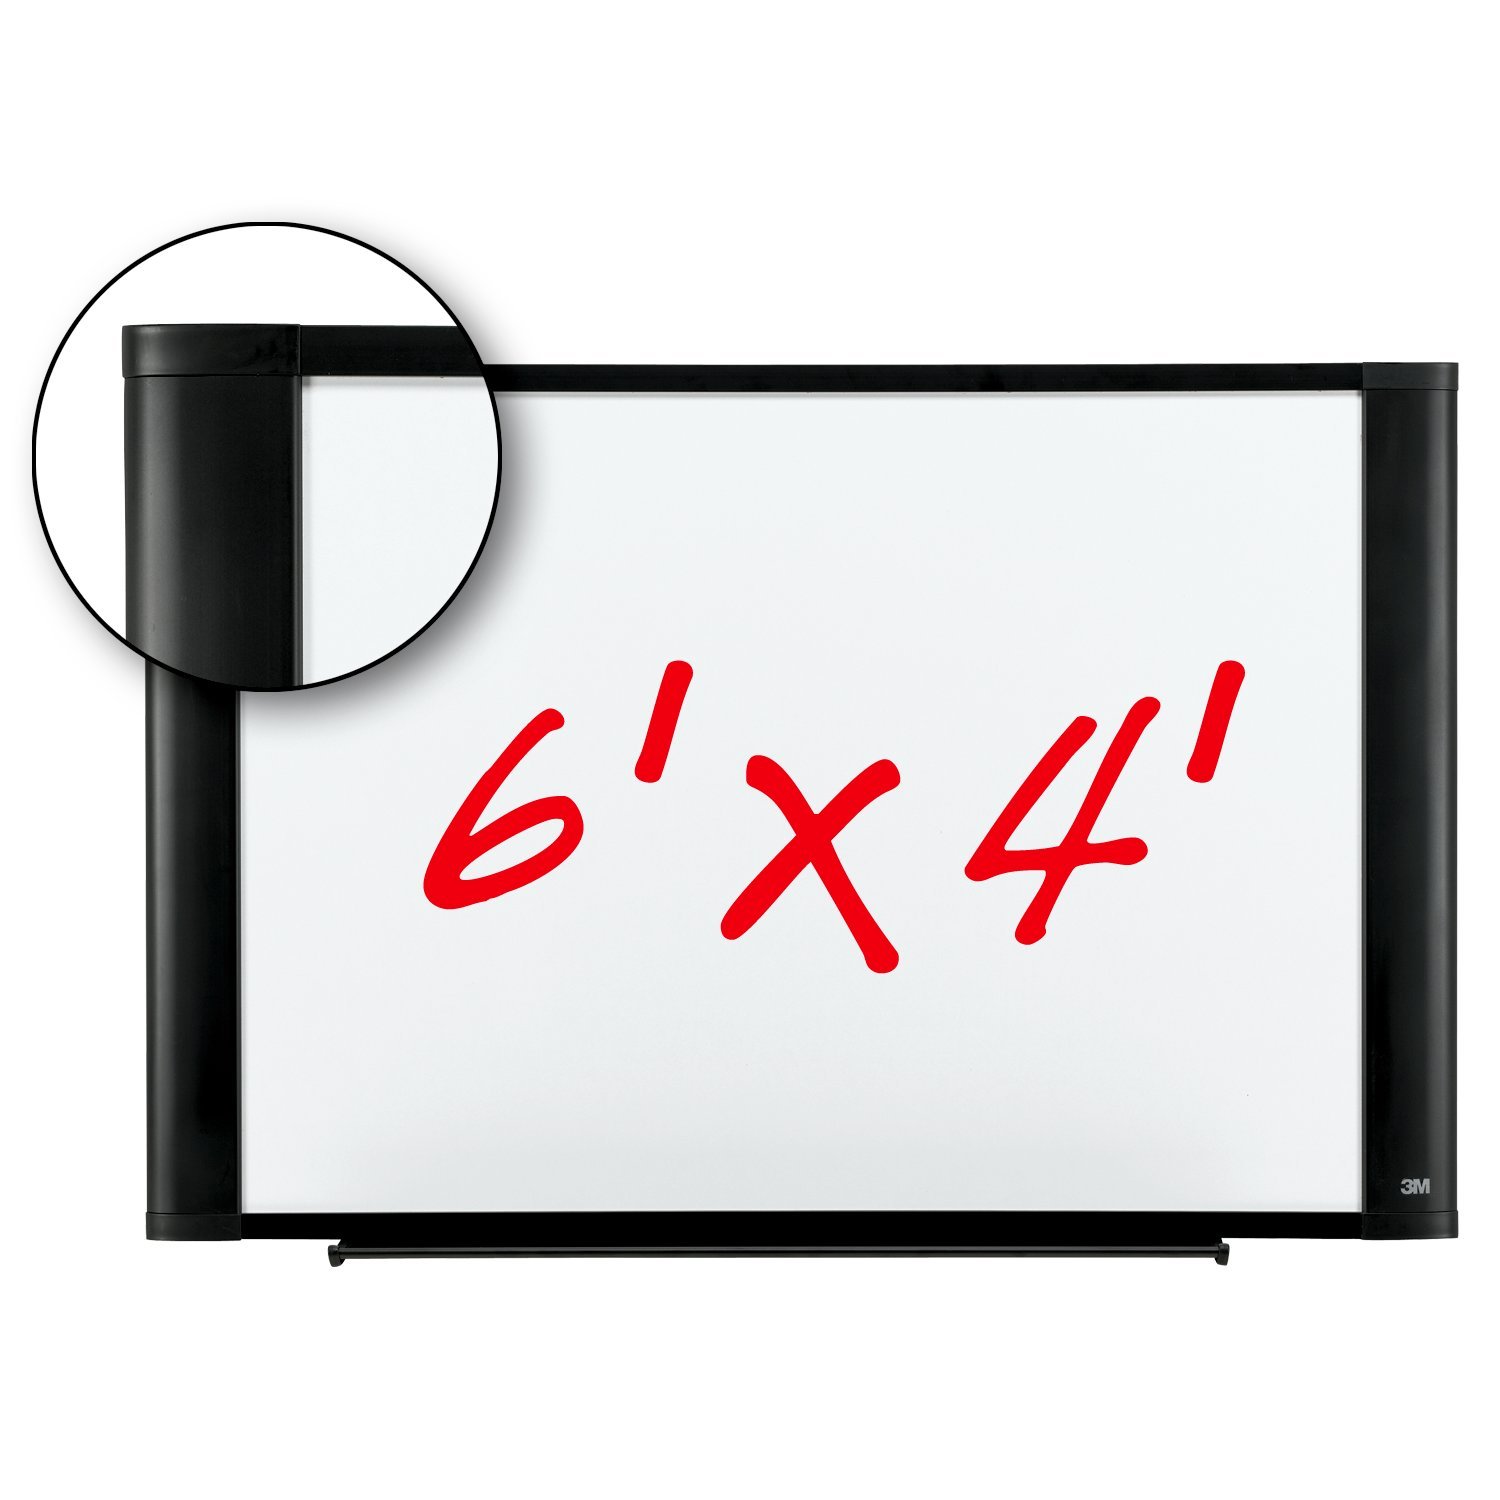 7010332241 - 3M Melamine Dry Erase Board M4836G, 48 in x 36 in x 1 in (121.9 cm x
91.4 cm x 2.5 cm) Graphite Finish Frame